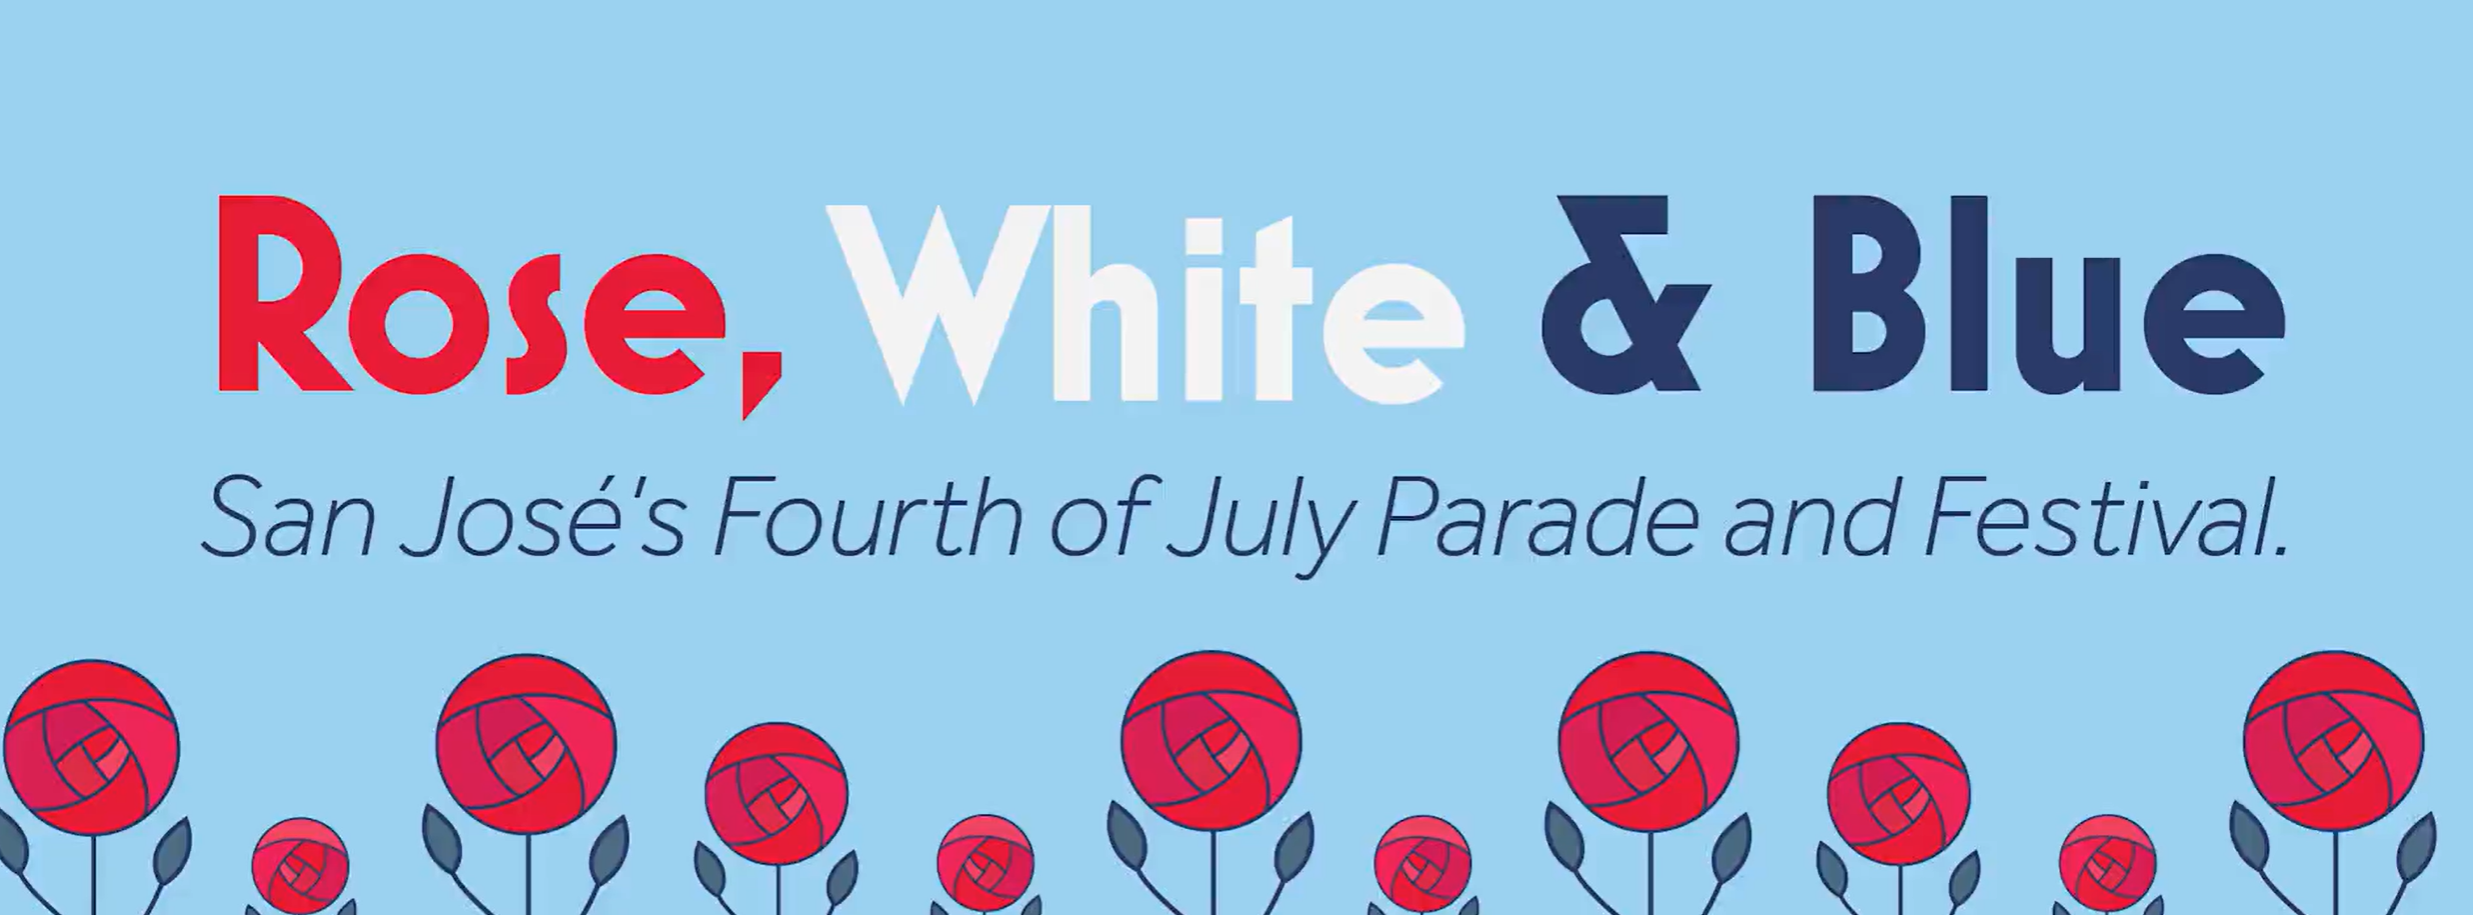 Rose, White and Blue Parade in San Jose